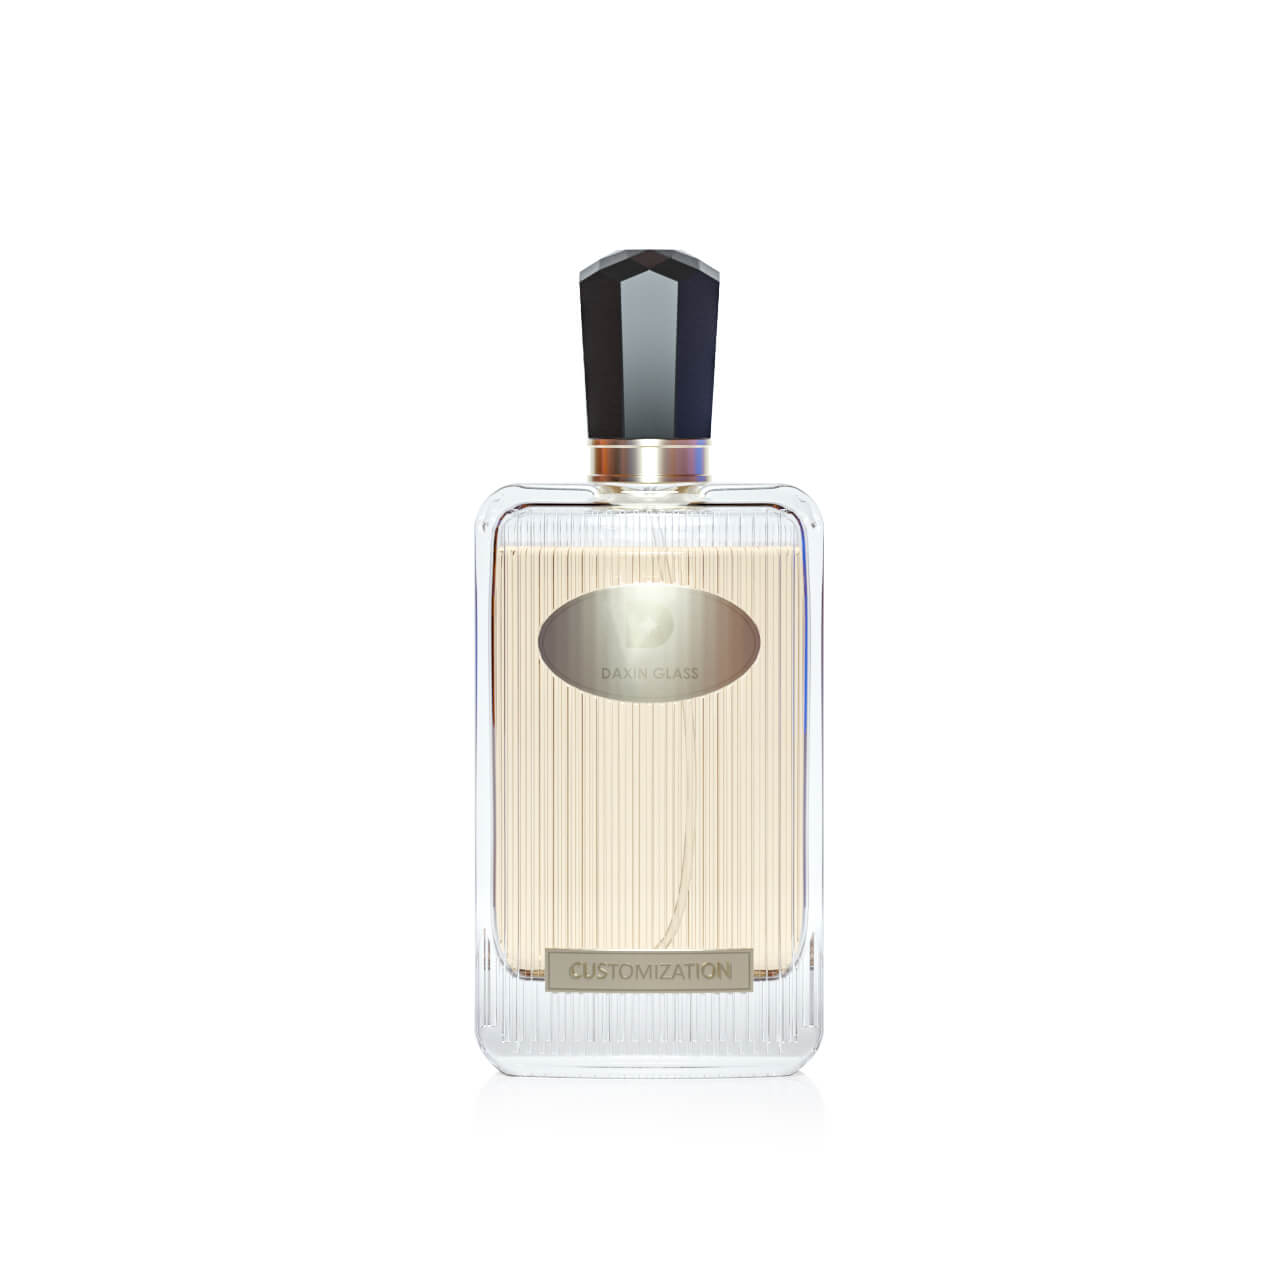 100ml perfume bottle (6)